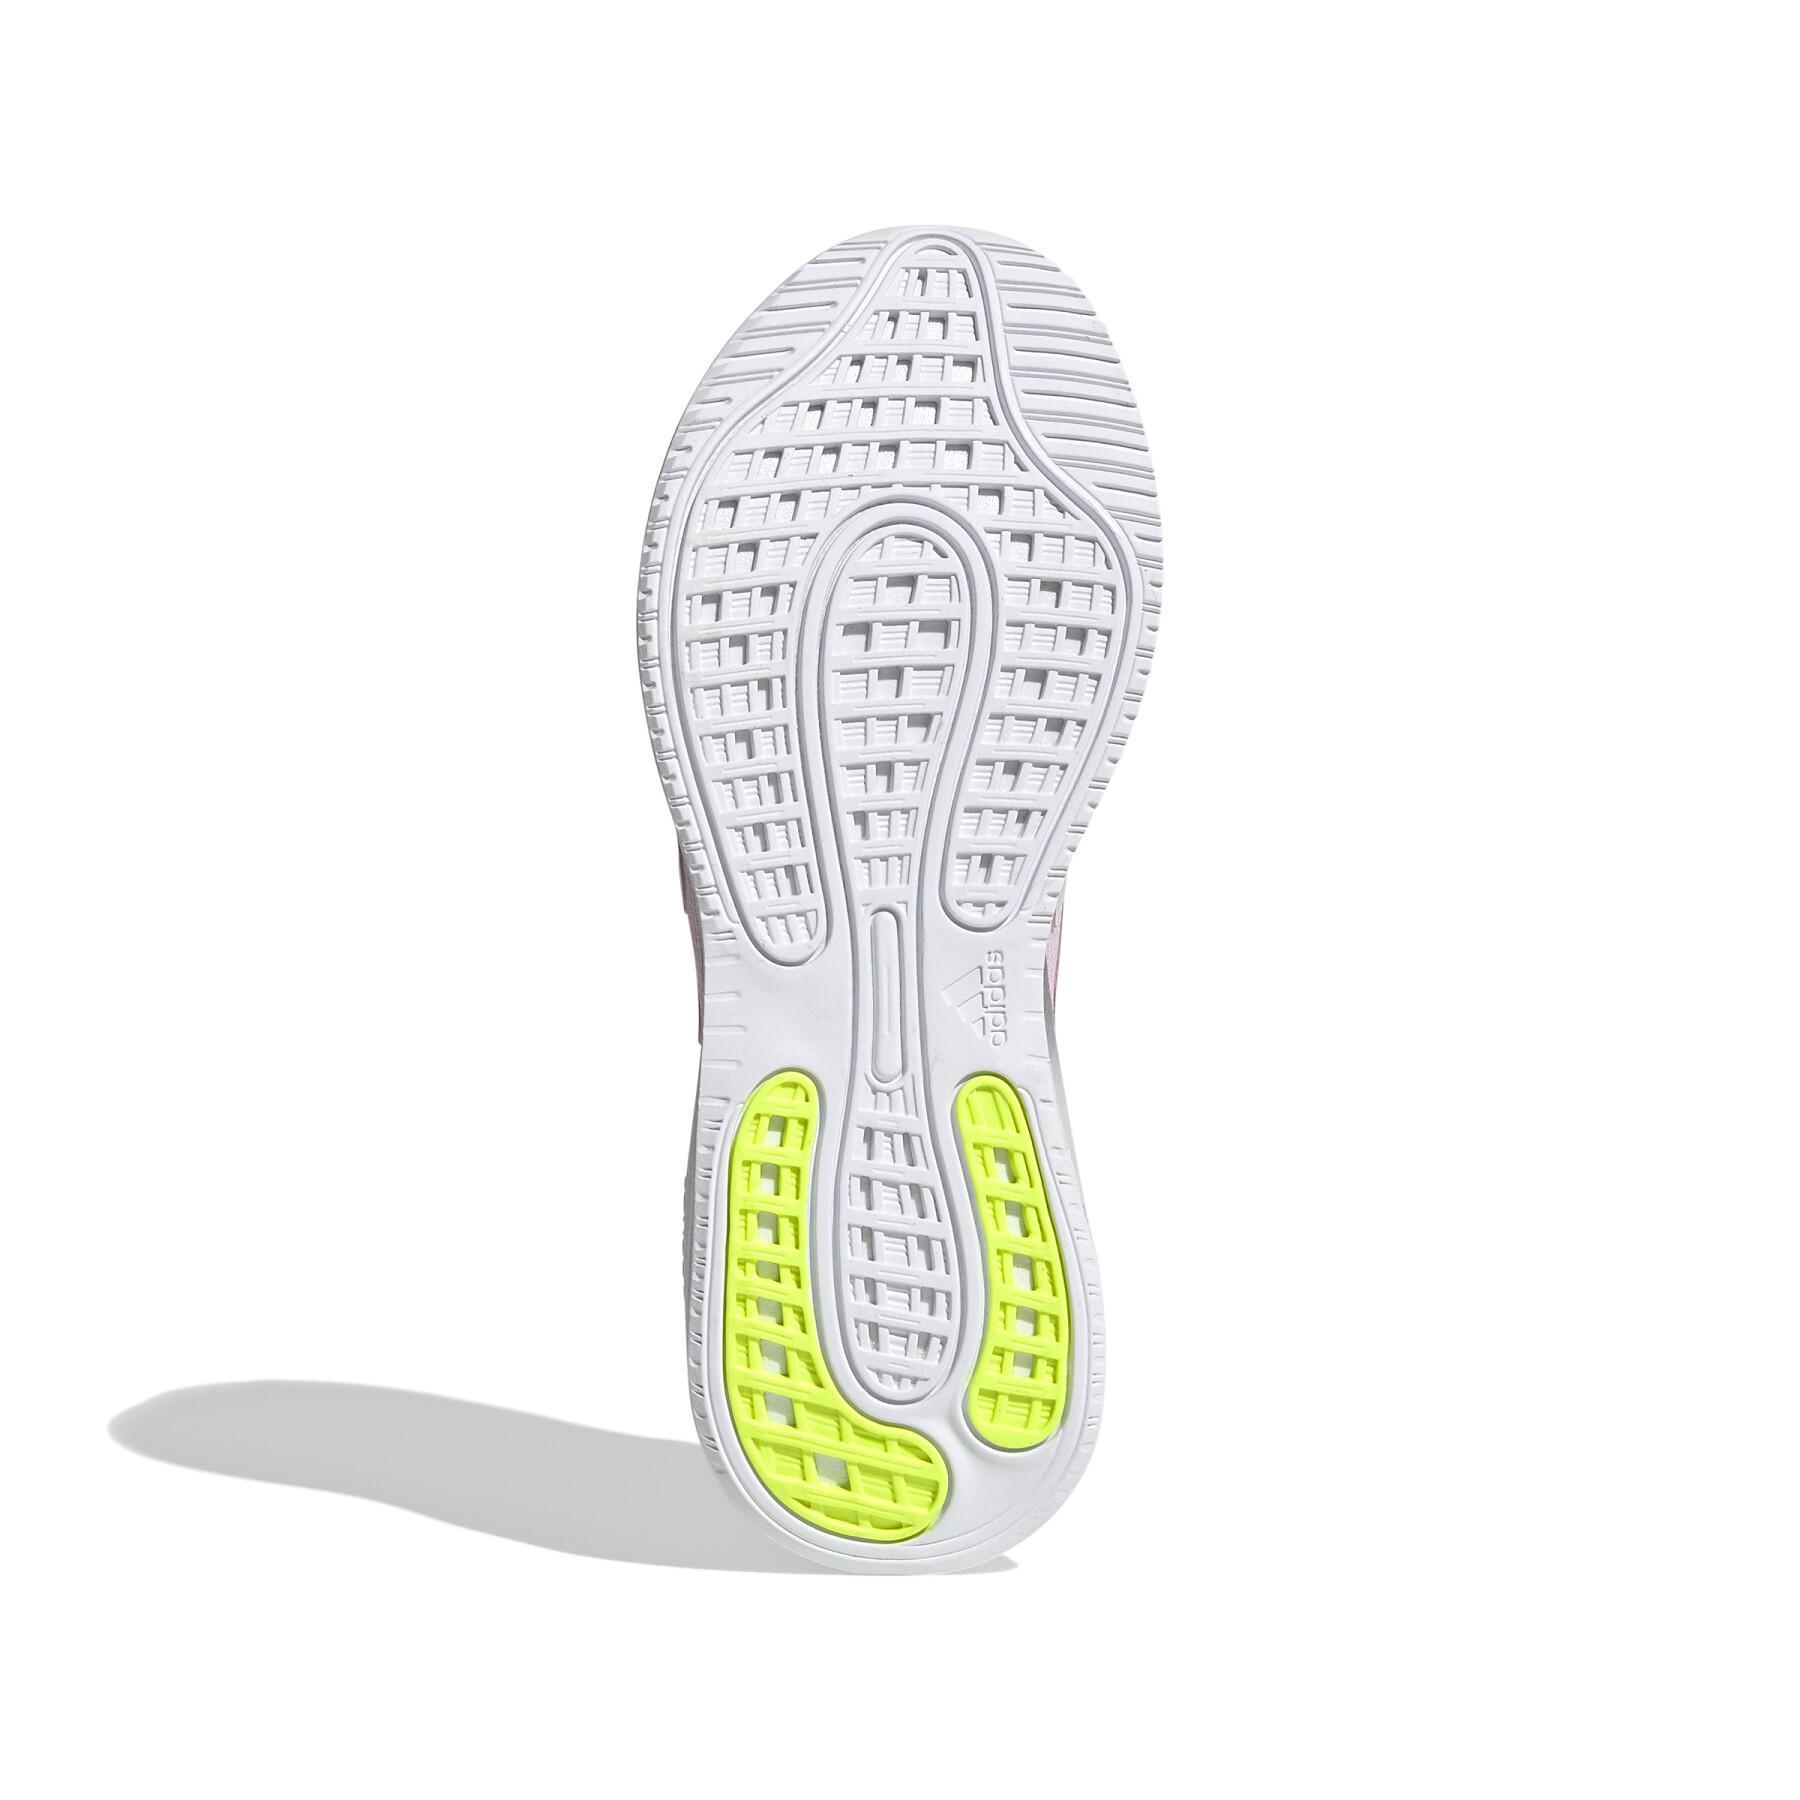 Laufschuhe für Frauen adidas Galaxar Run